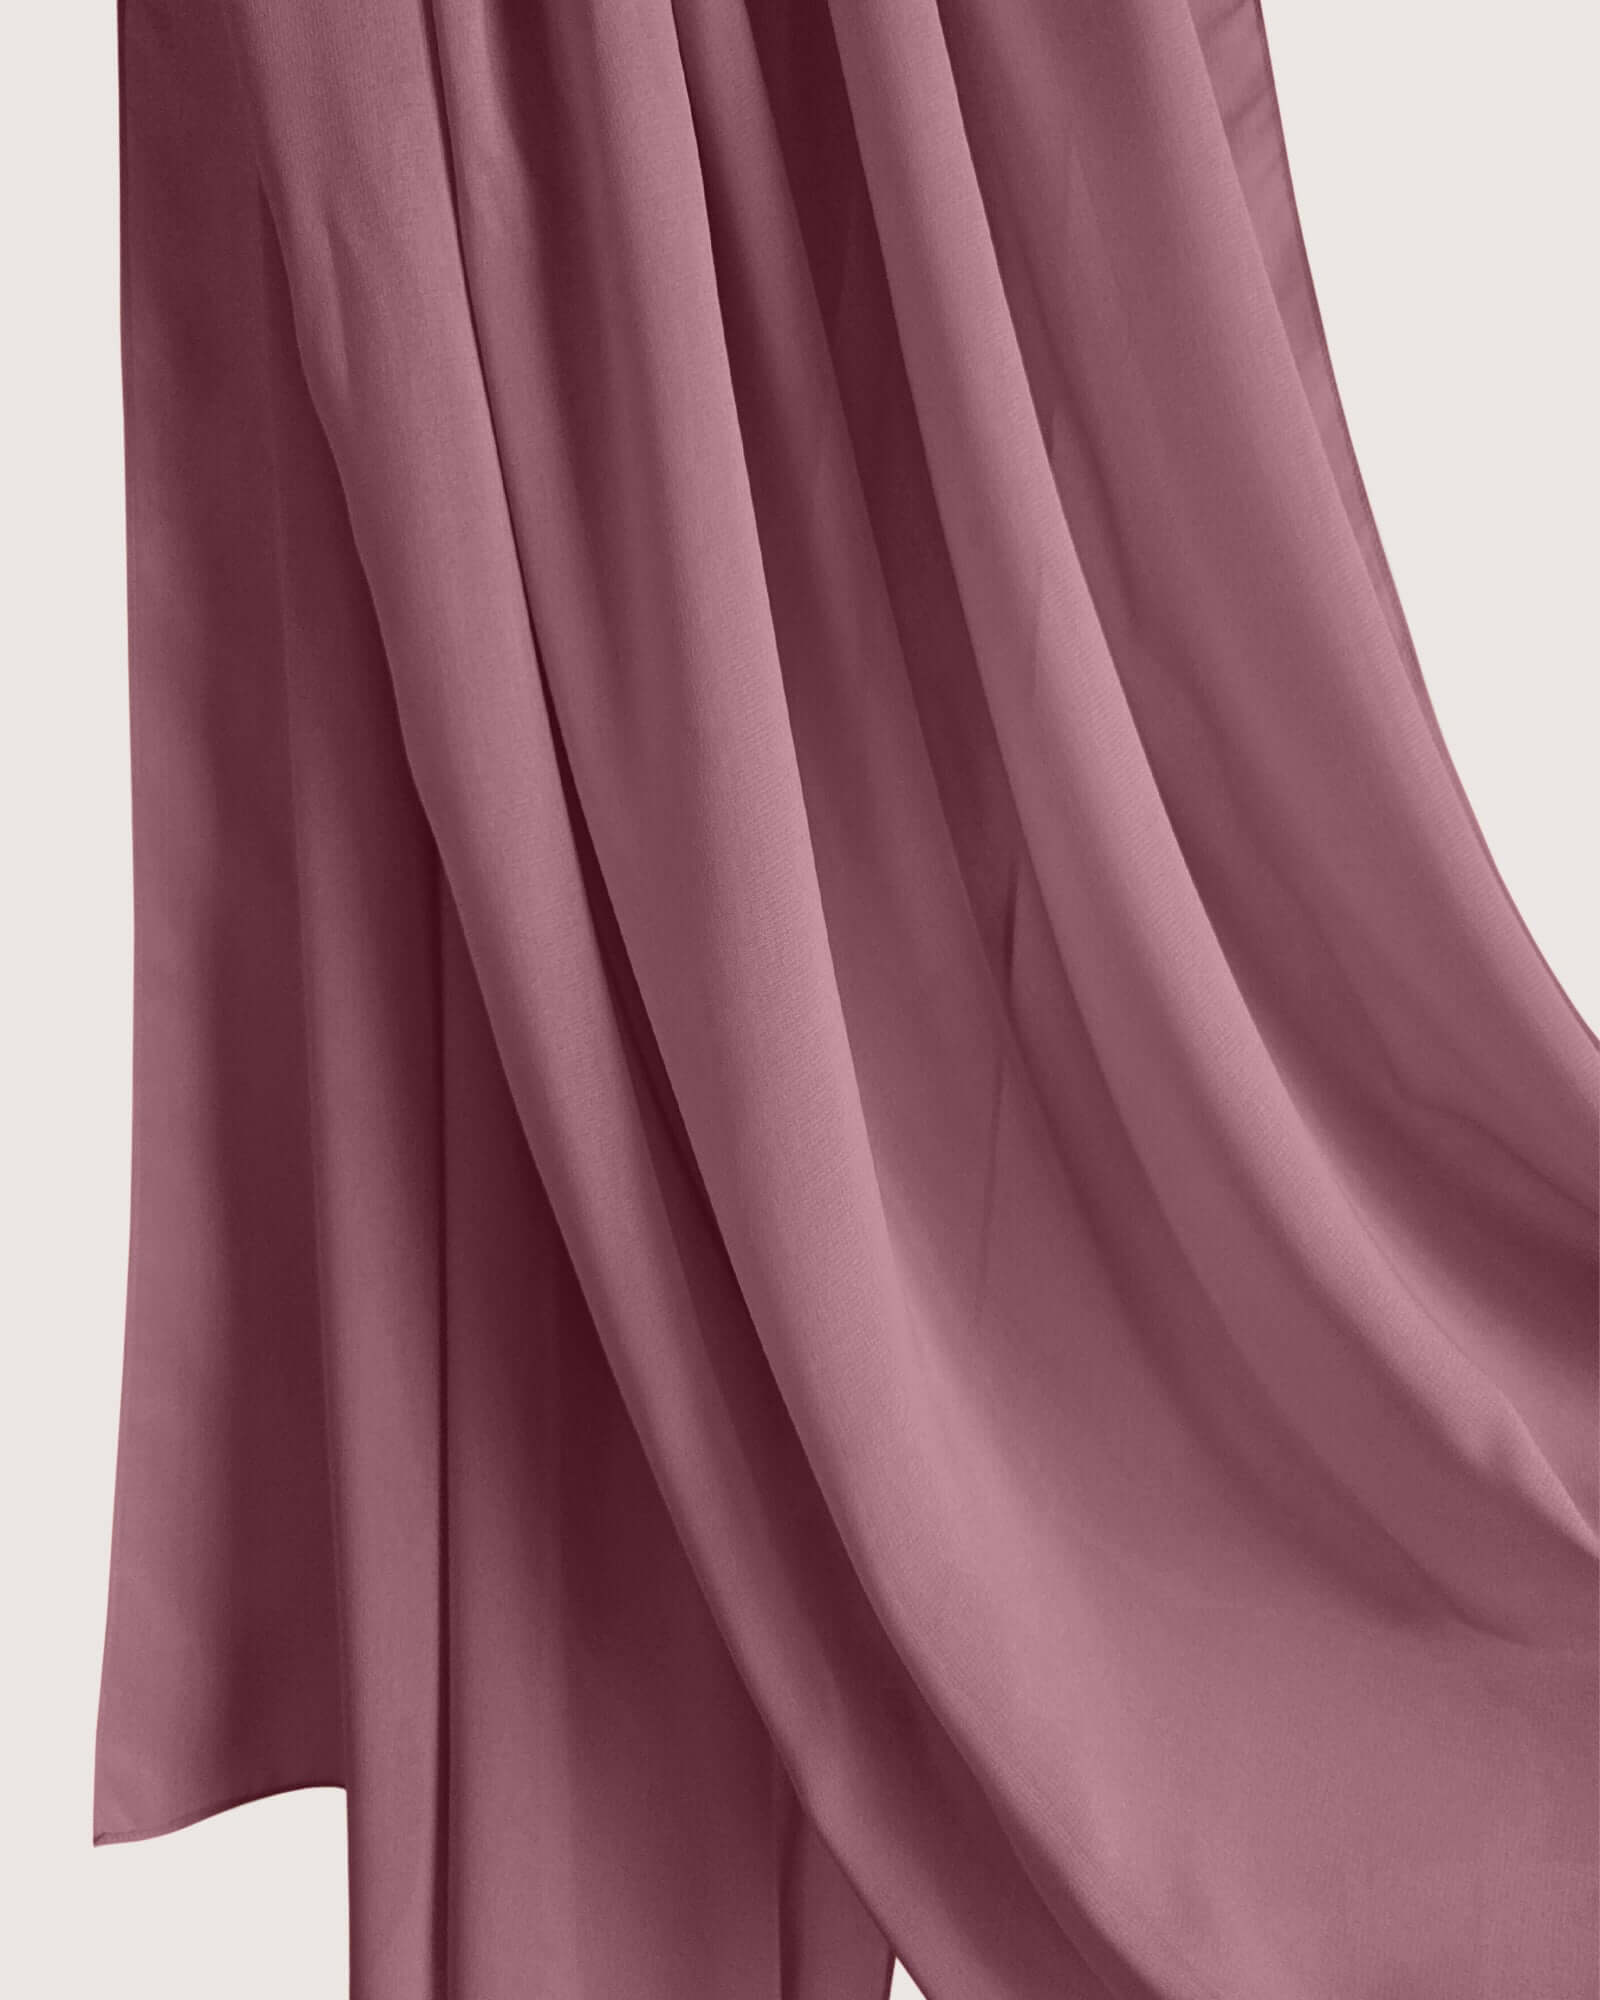 Premium Deep Pink Chiffon Hijab Scarf